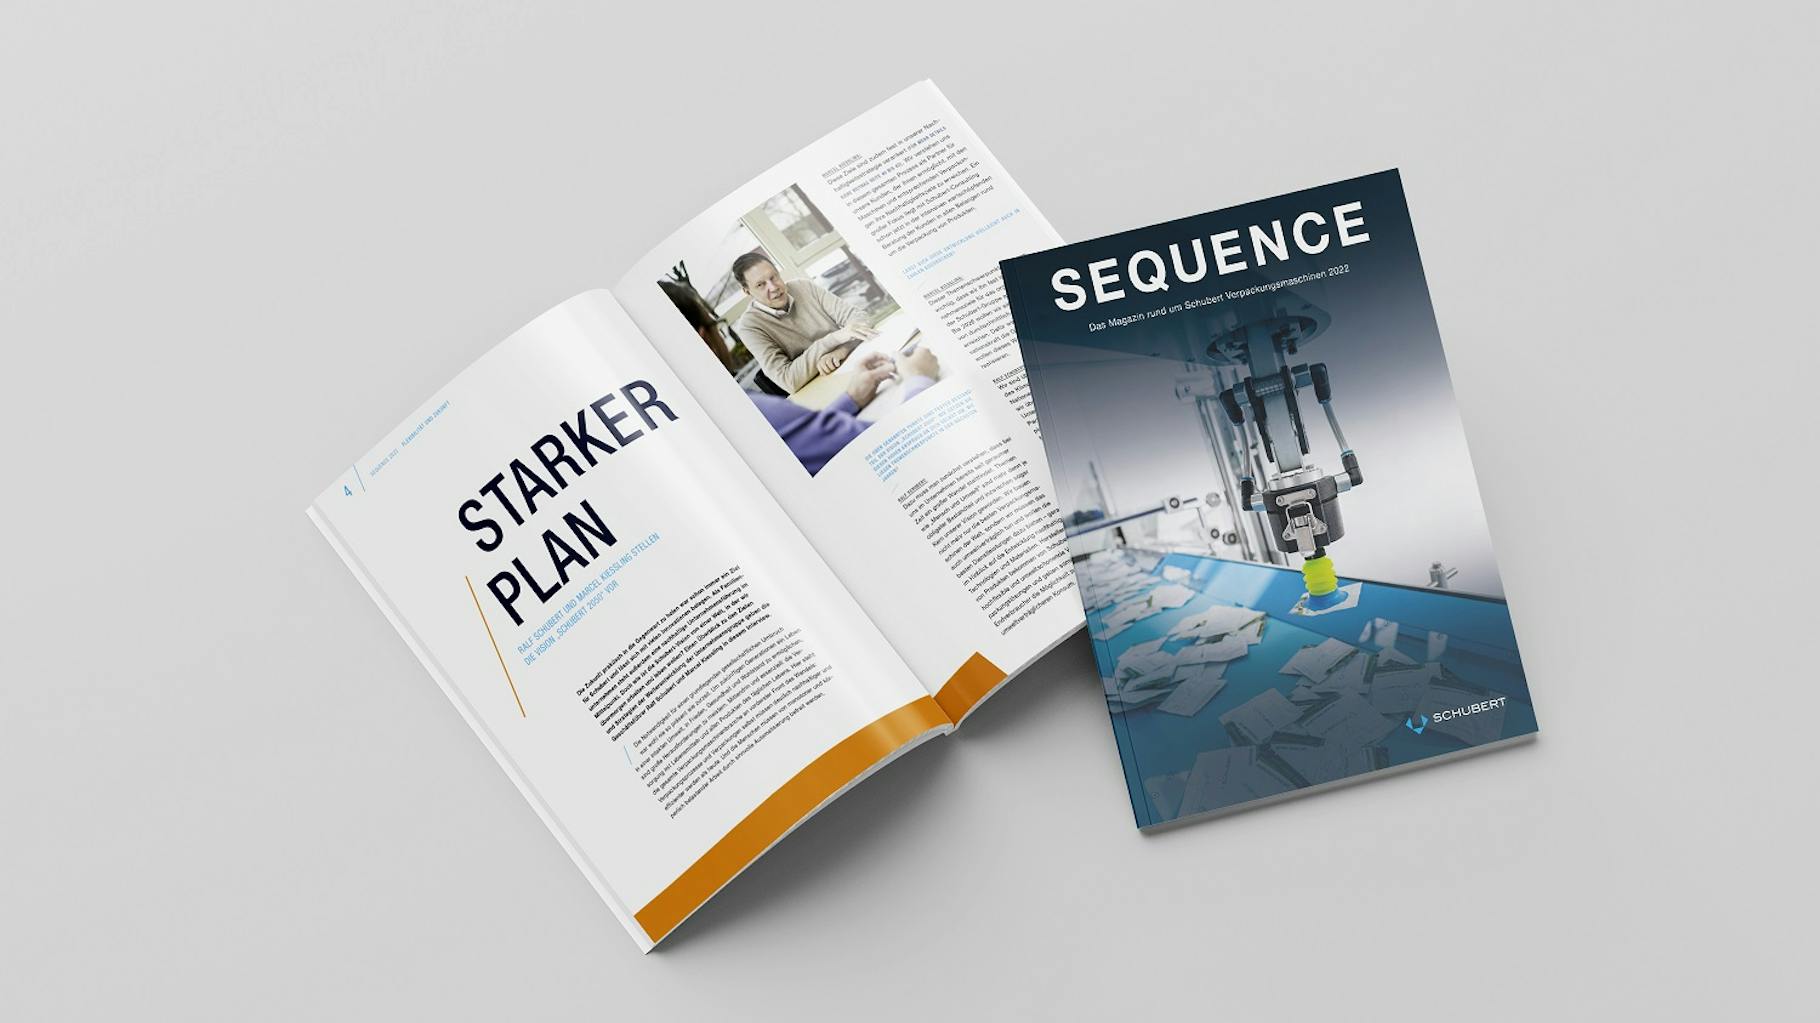 Schubert Kundenmagazin Sequence Ausgabe 2022